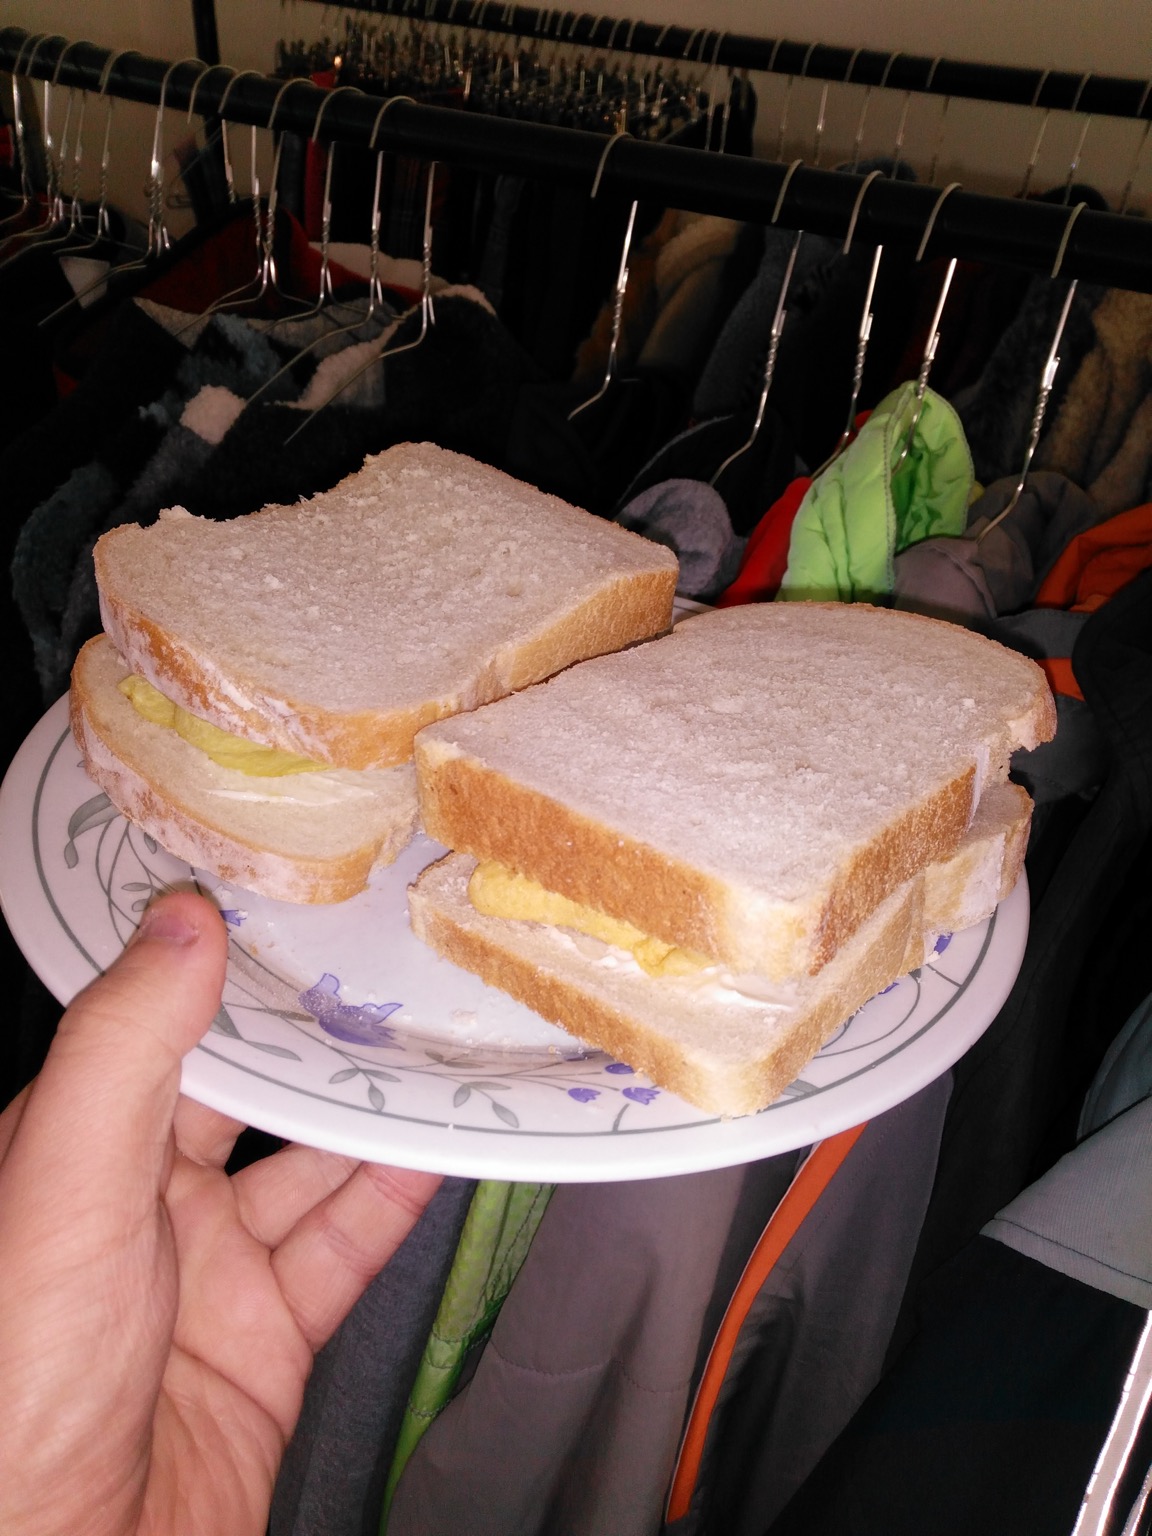 Flash photo of crisp sandwiches in a wardrobe